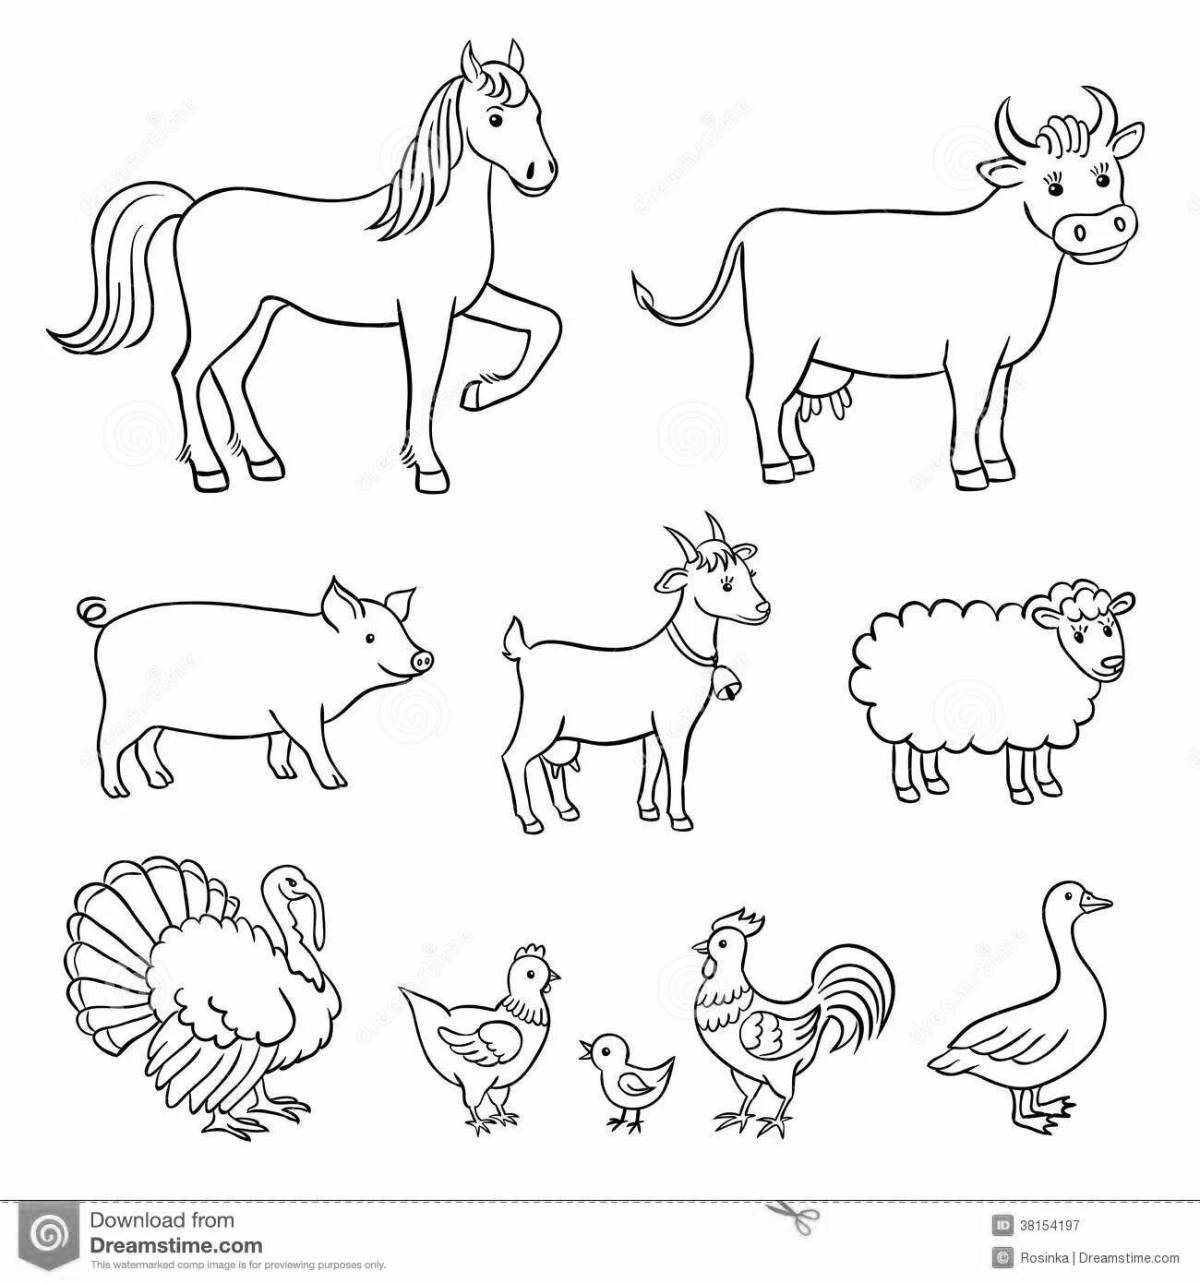 Fancy pet coloring pages for preschoolers